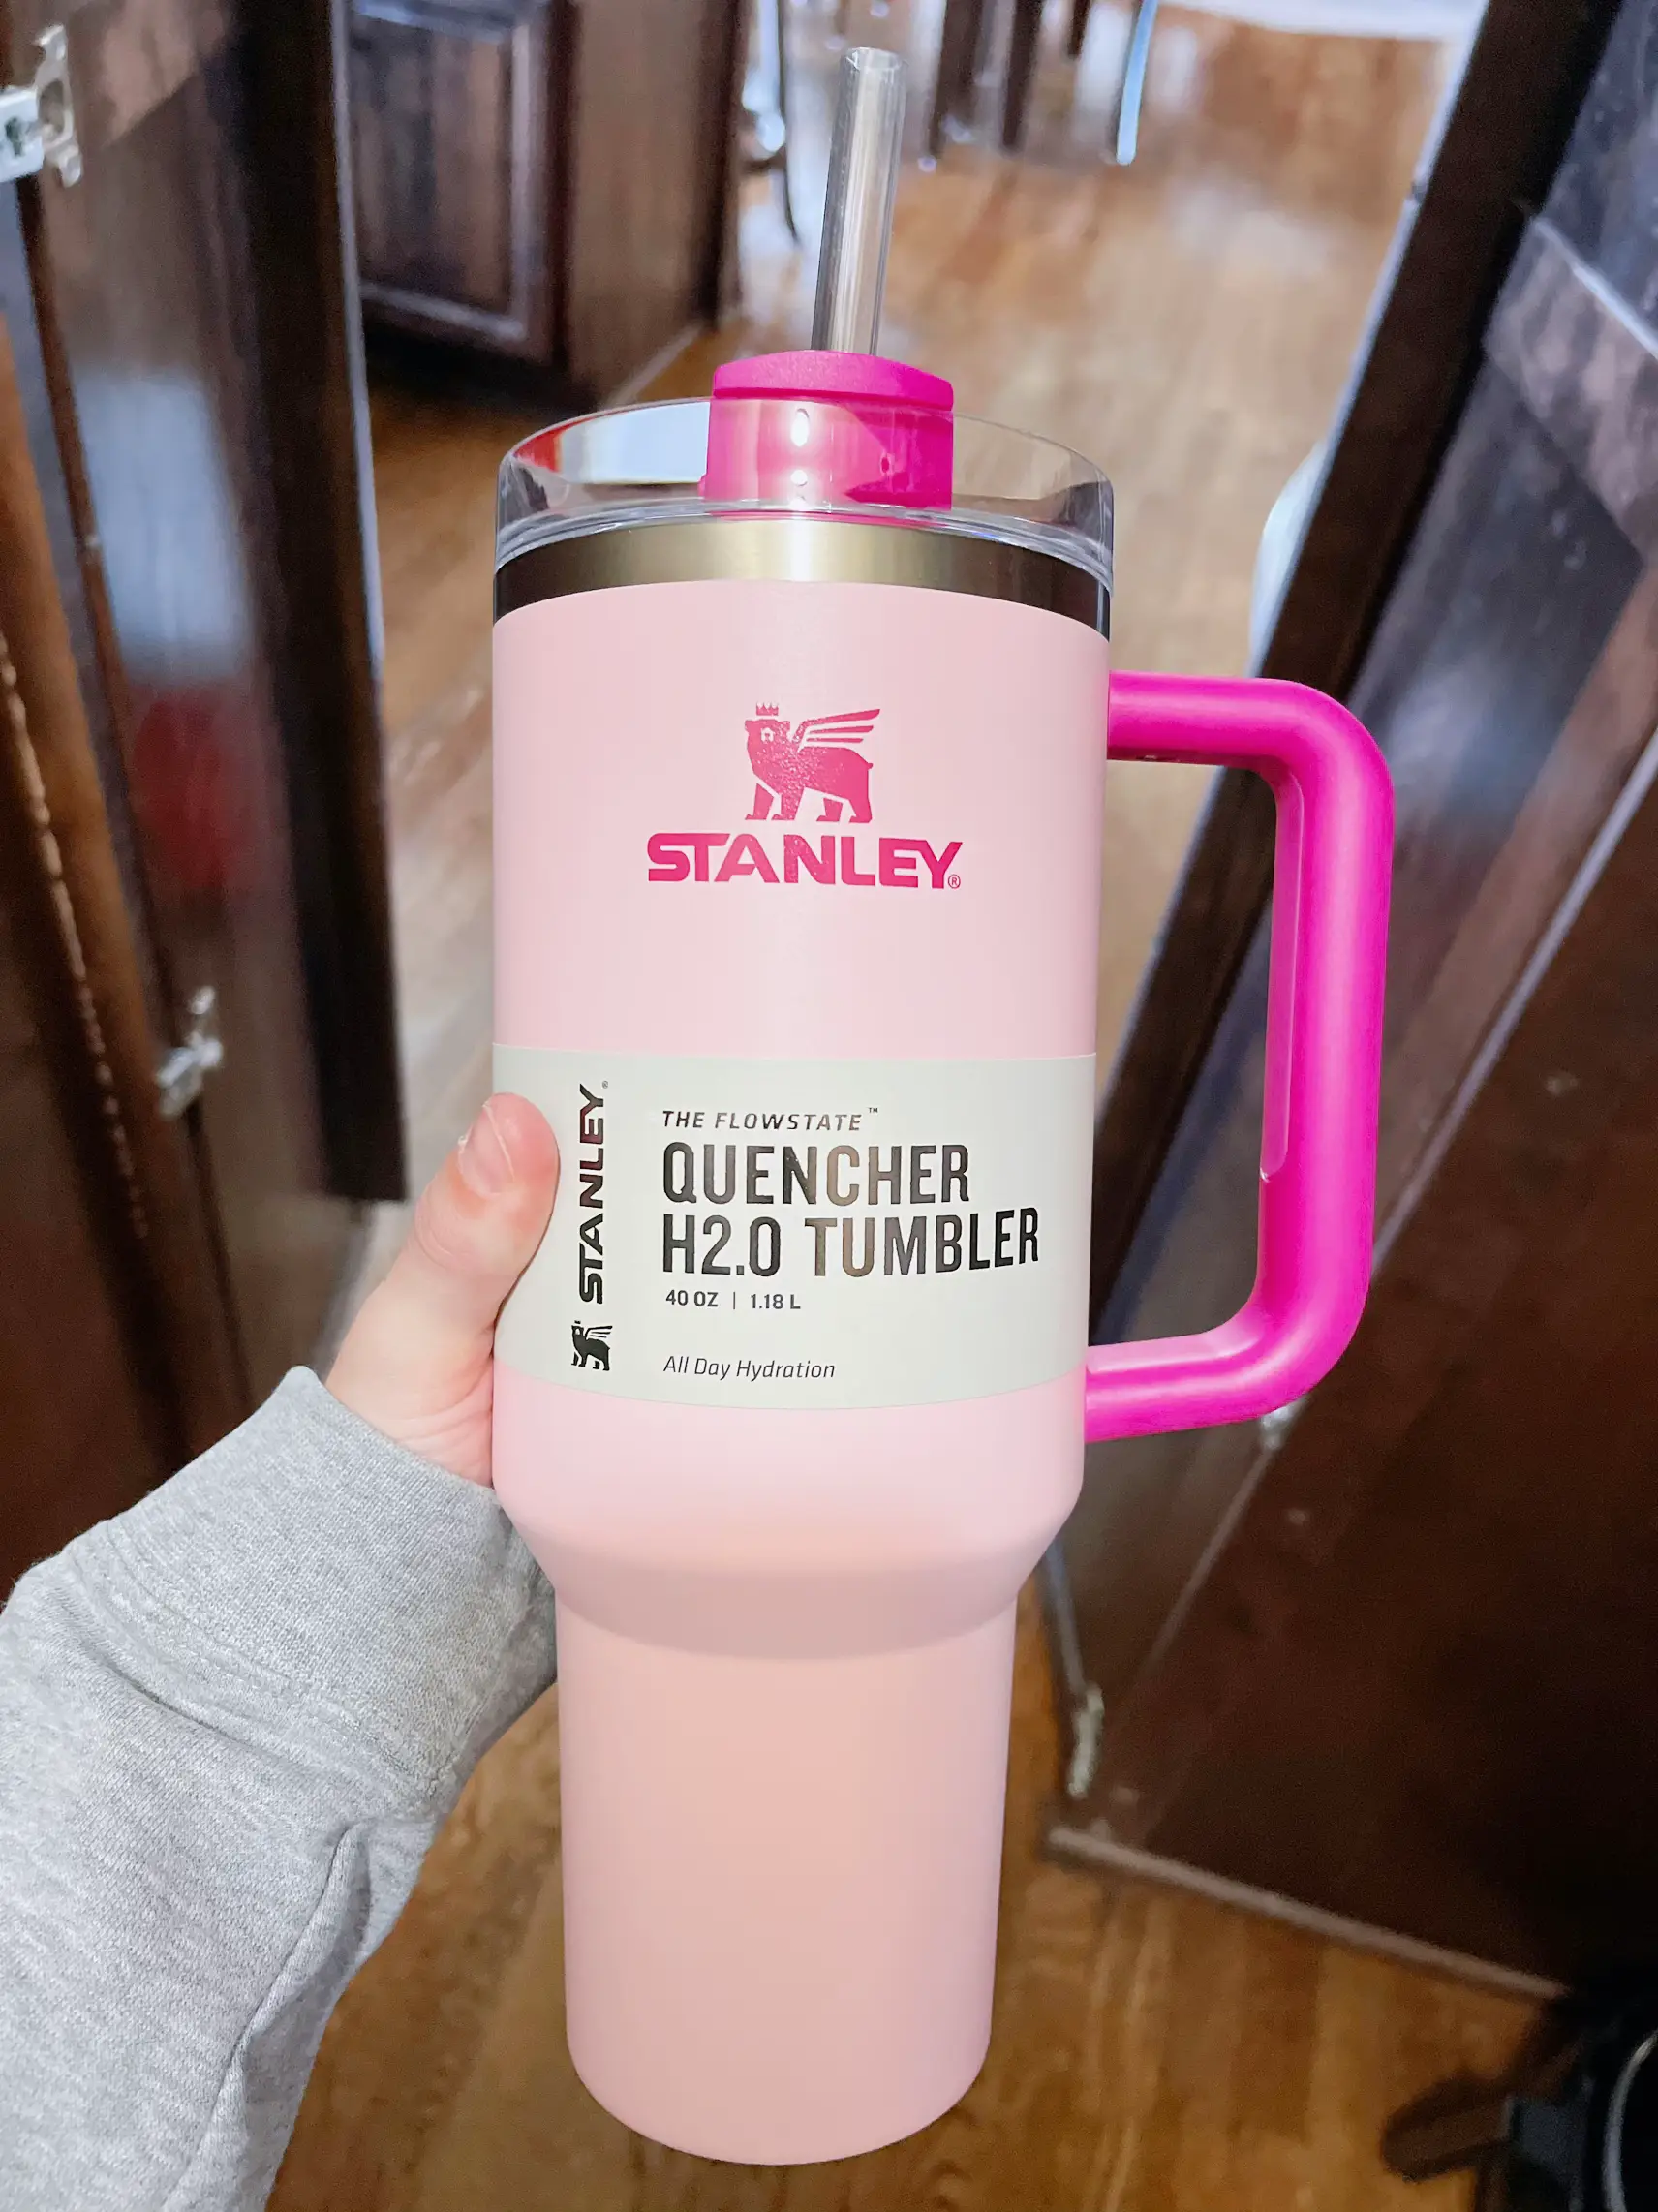 Stanley Cup 40oz Quencher H2.0 Tumbler (Pink - Depop